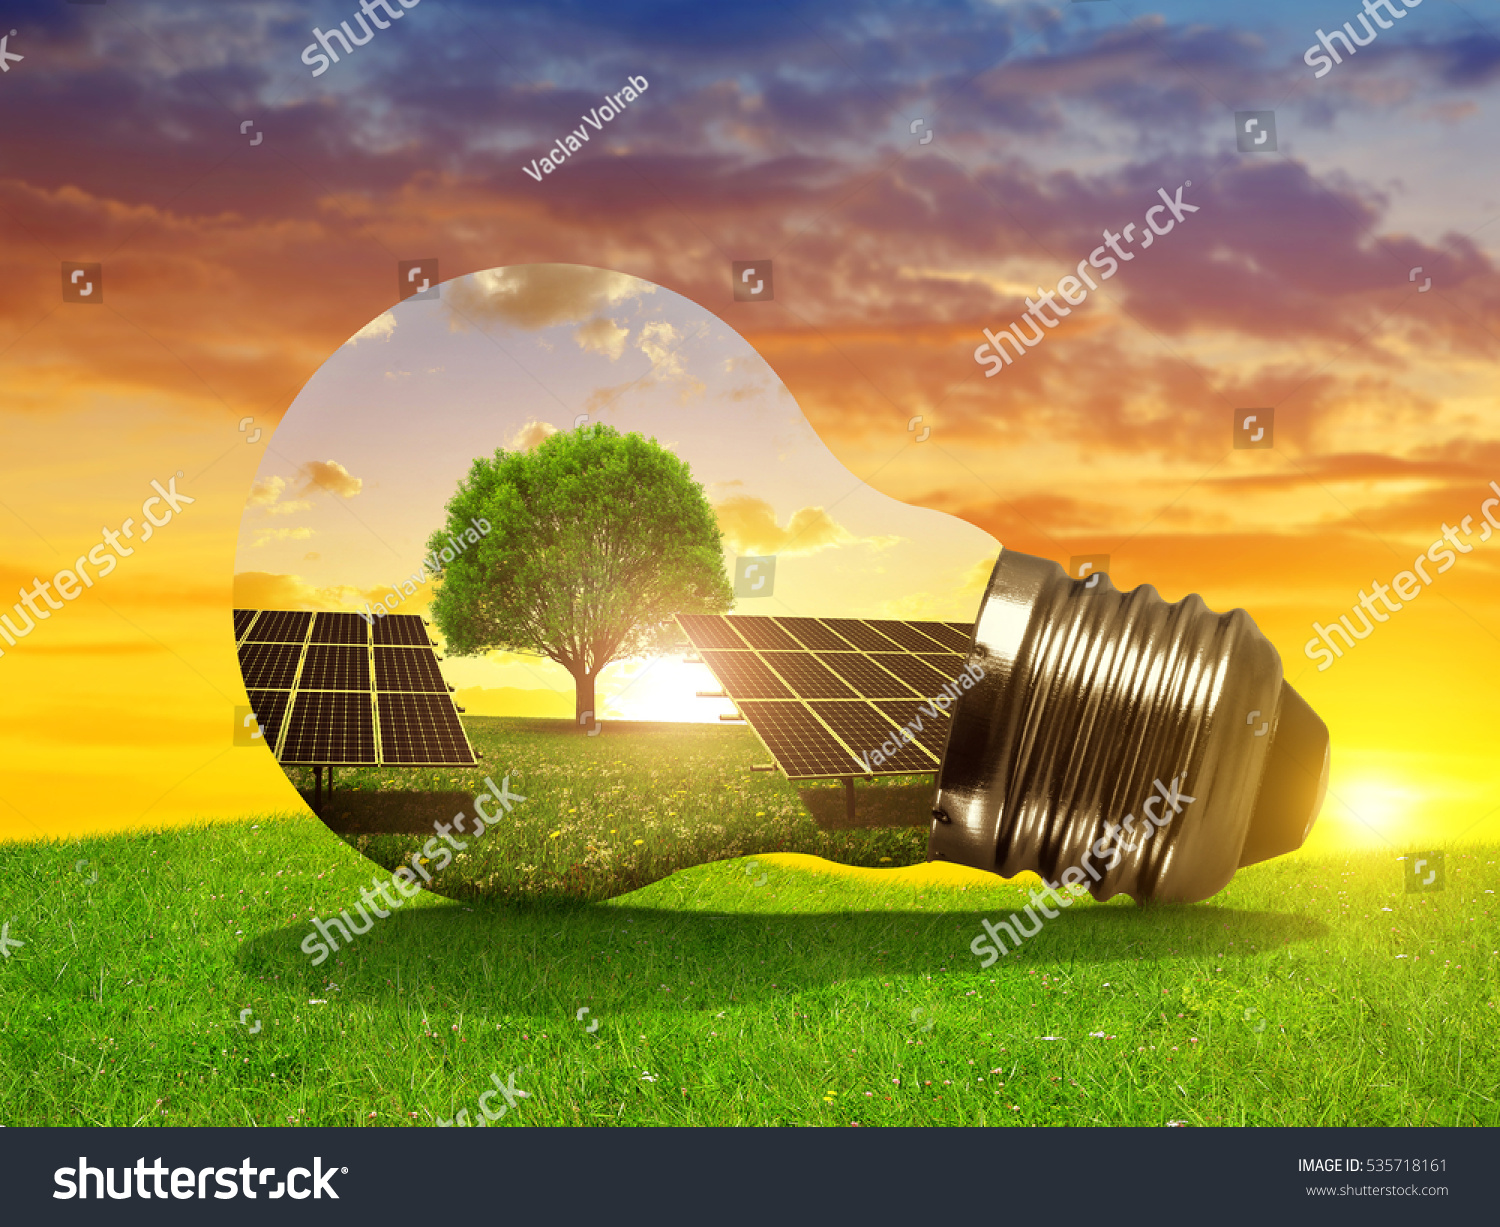 PowerPoint Template Renewable Energy Environment Solar mkmoipini 